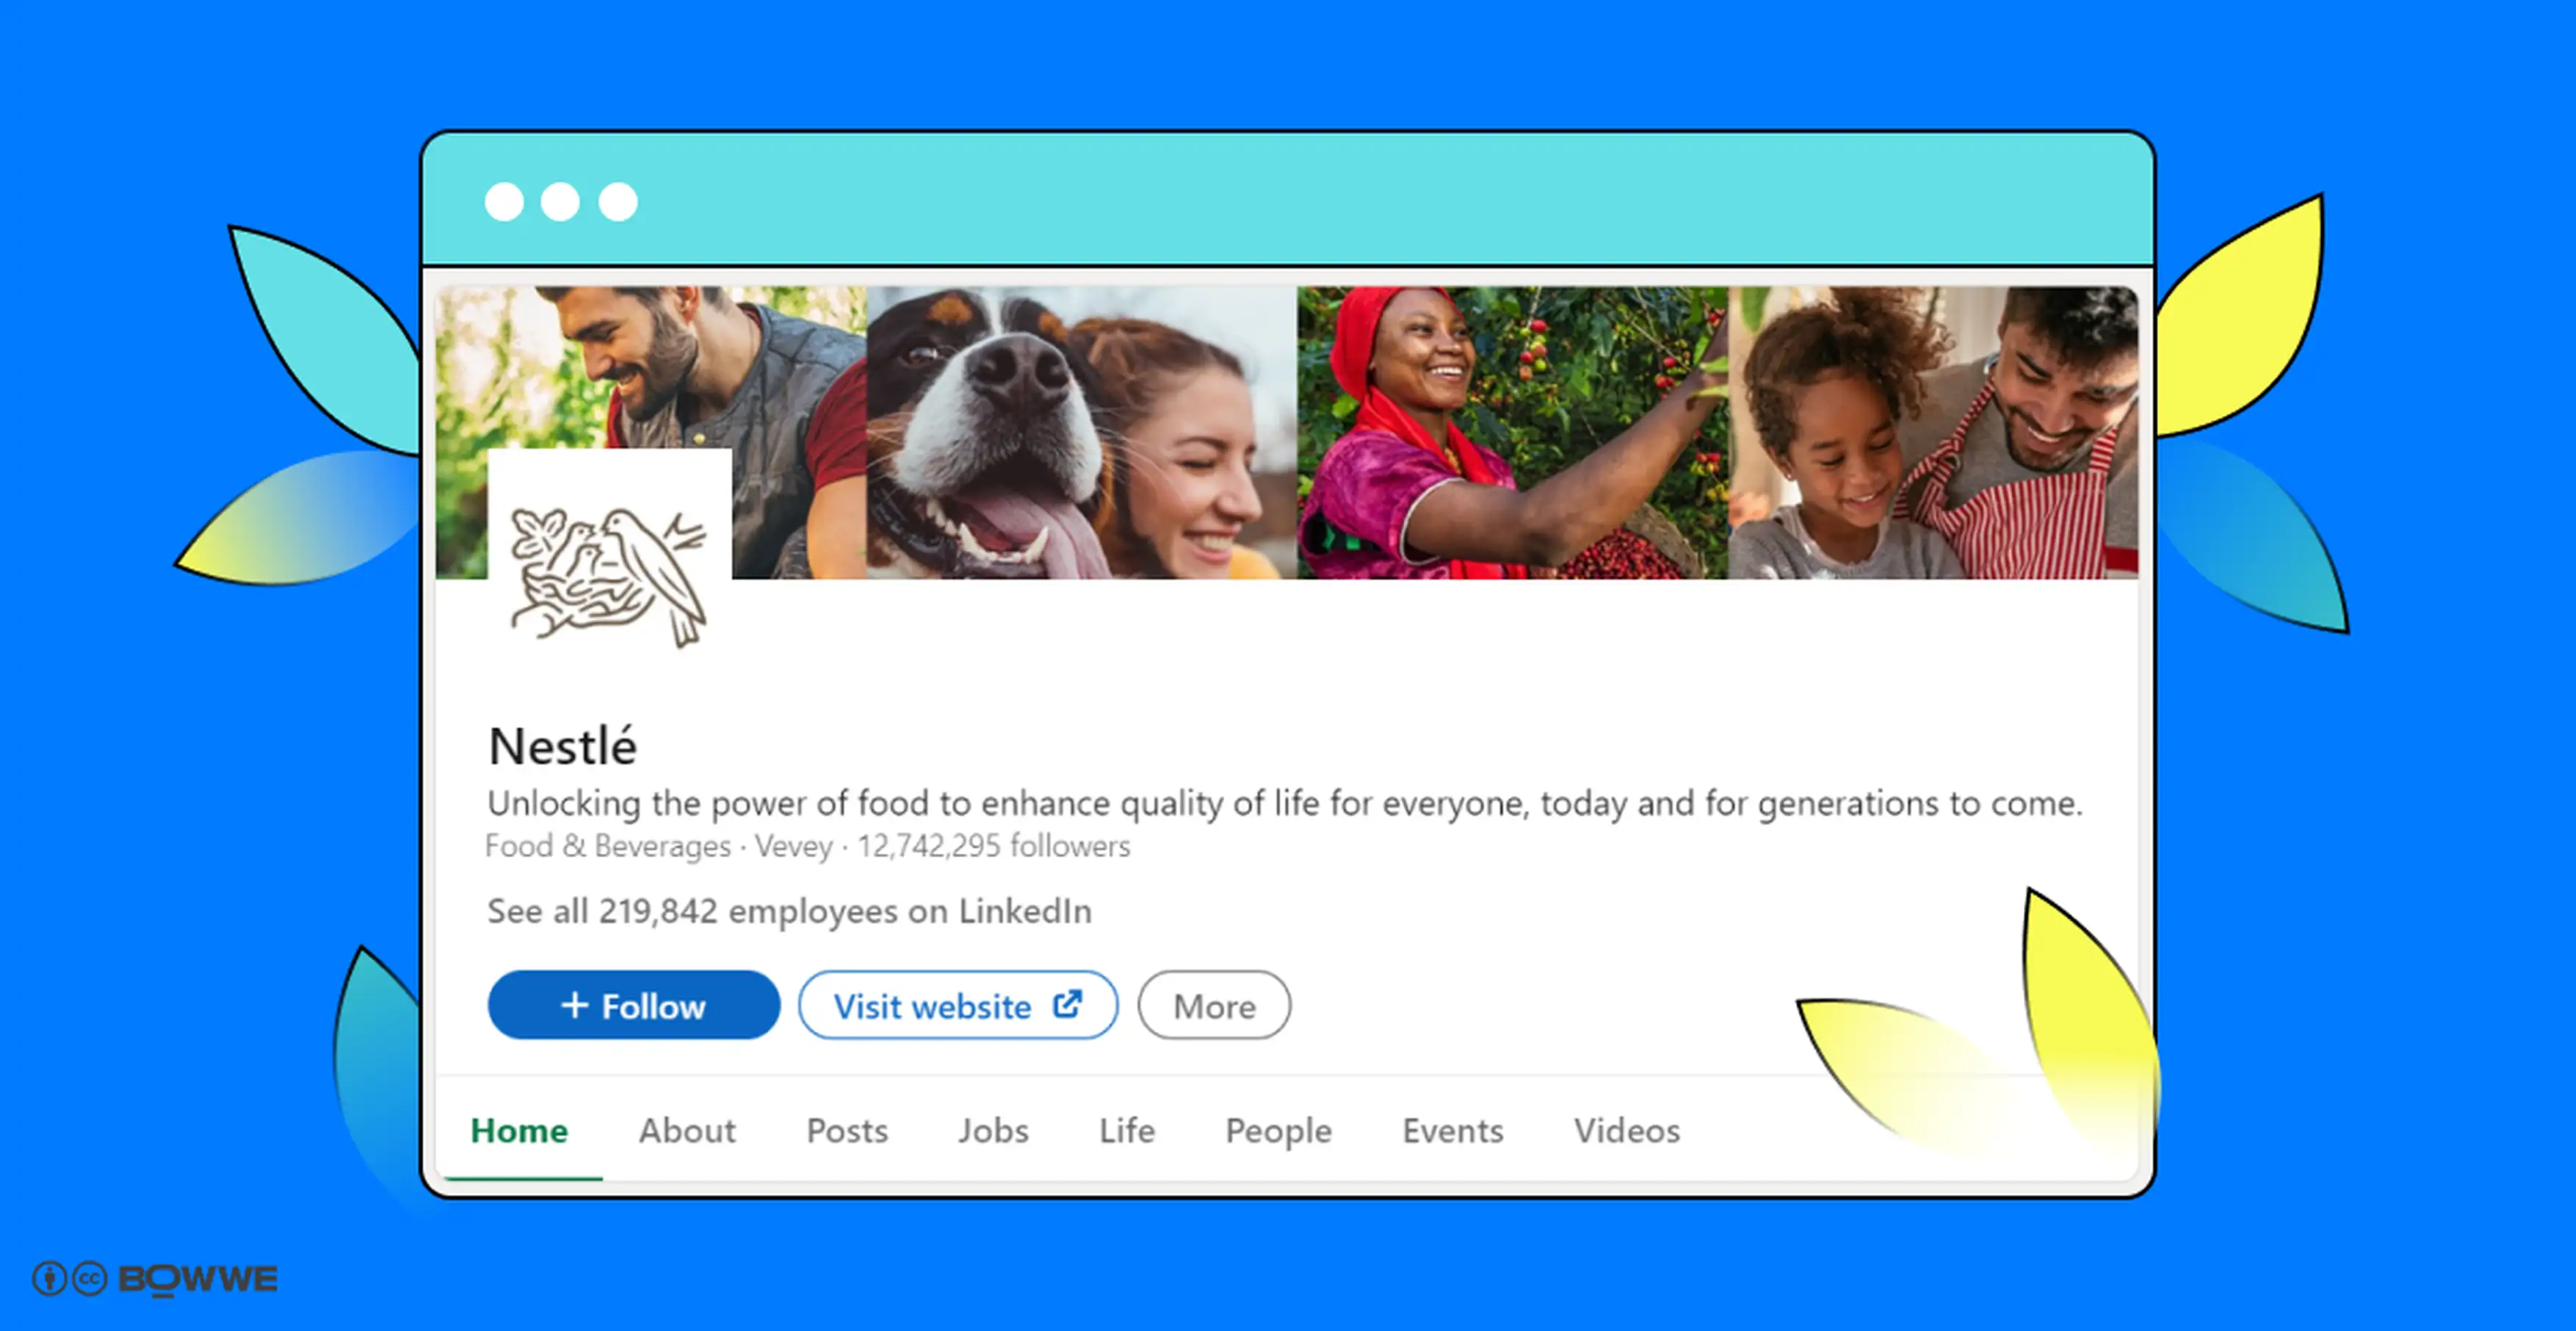 Nestle's profile on Linkedin